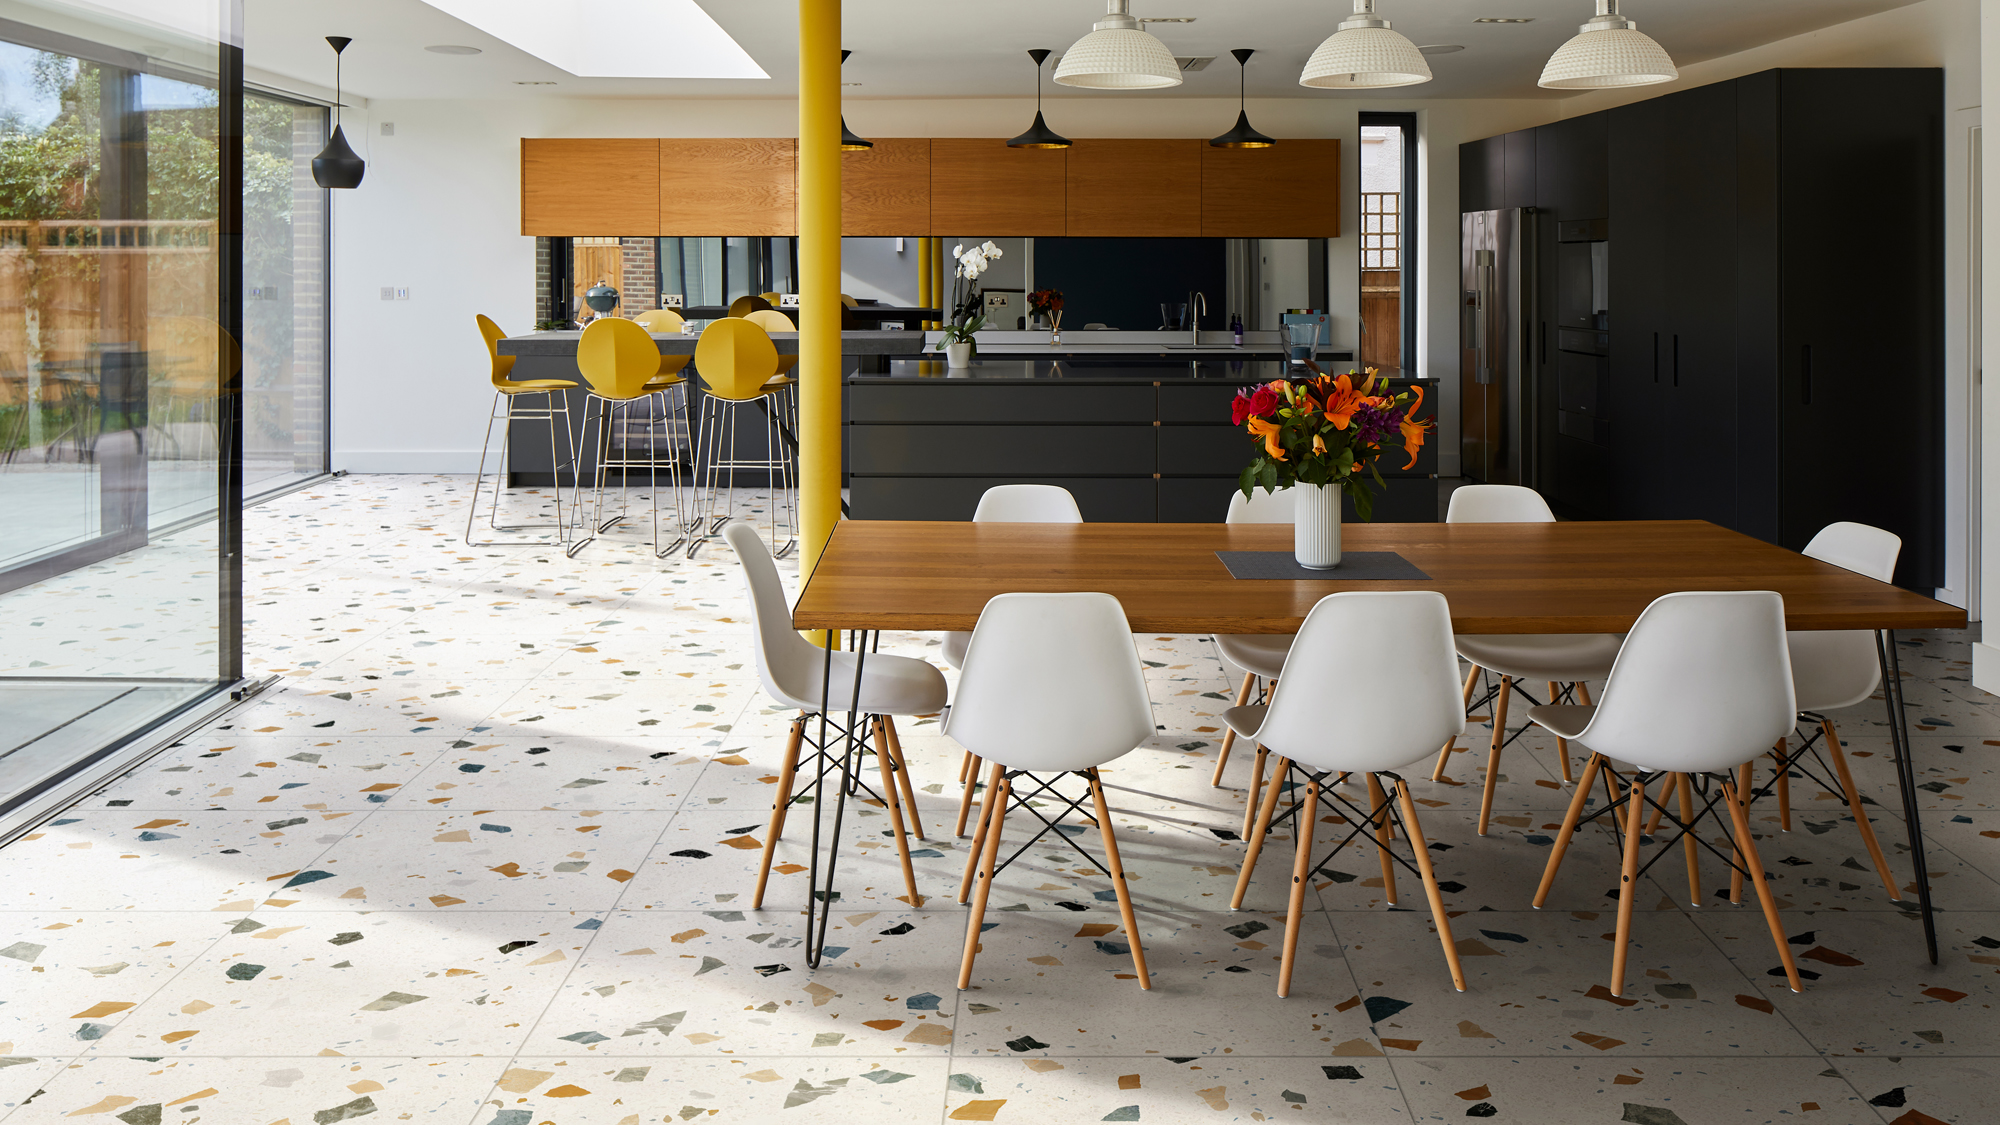 Kitchen Floor Tile Ideas 14 Durable, Ceramic Tile Floor Designs Ideas